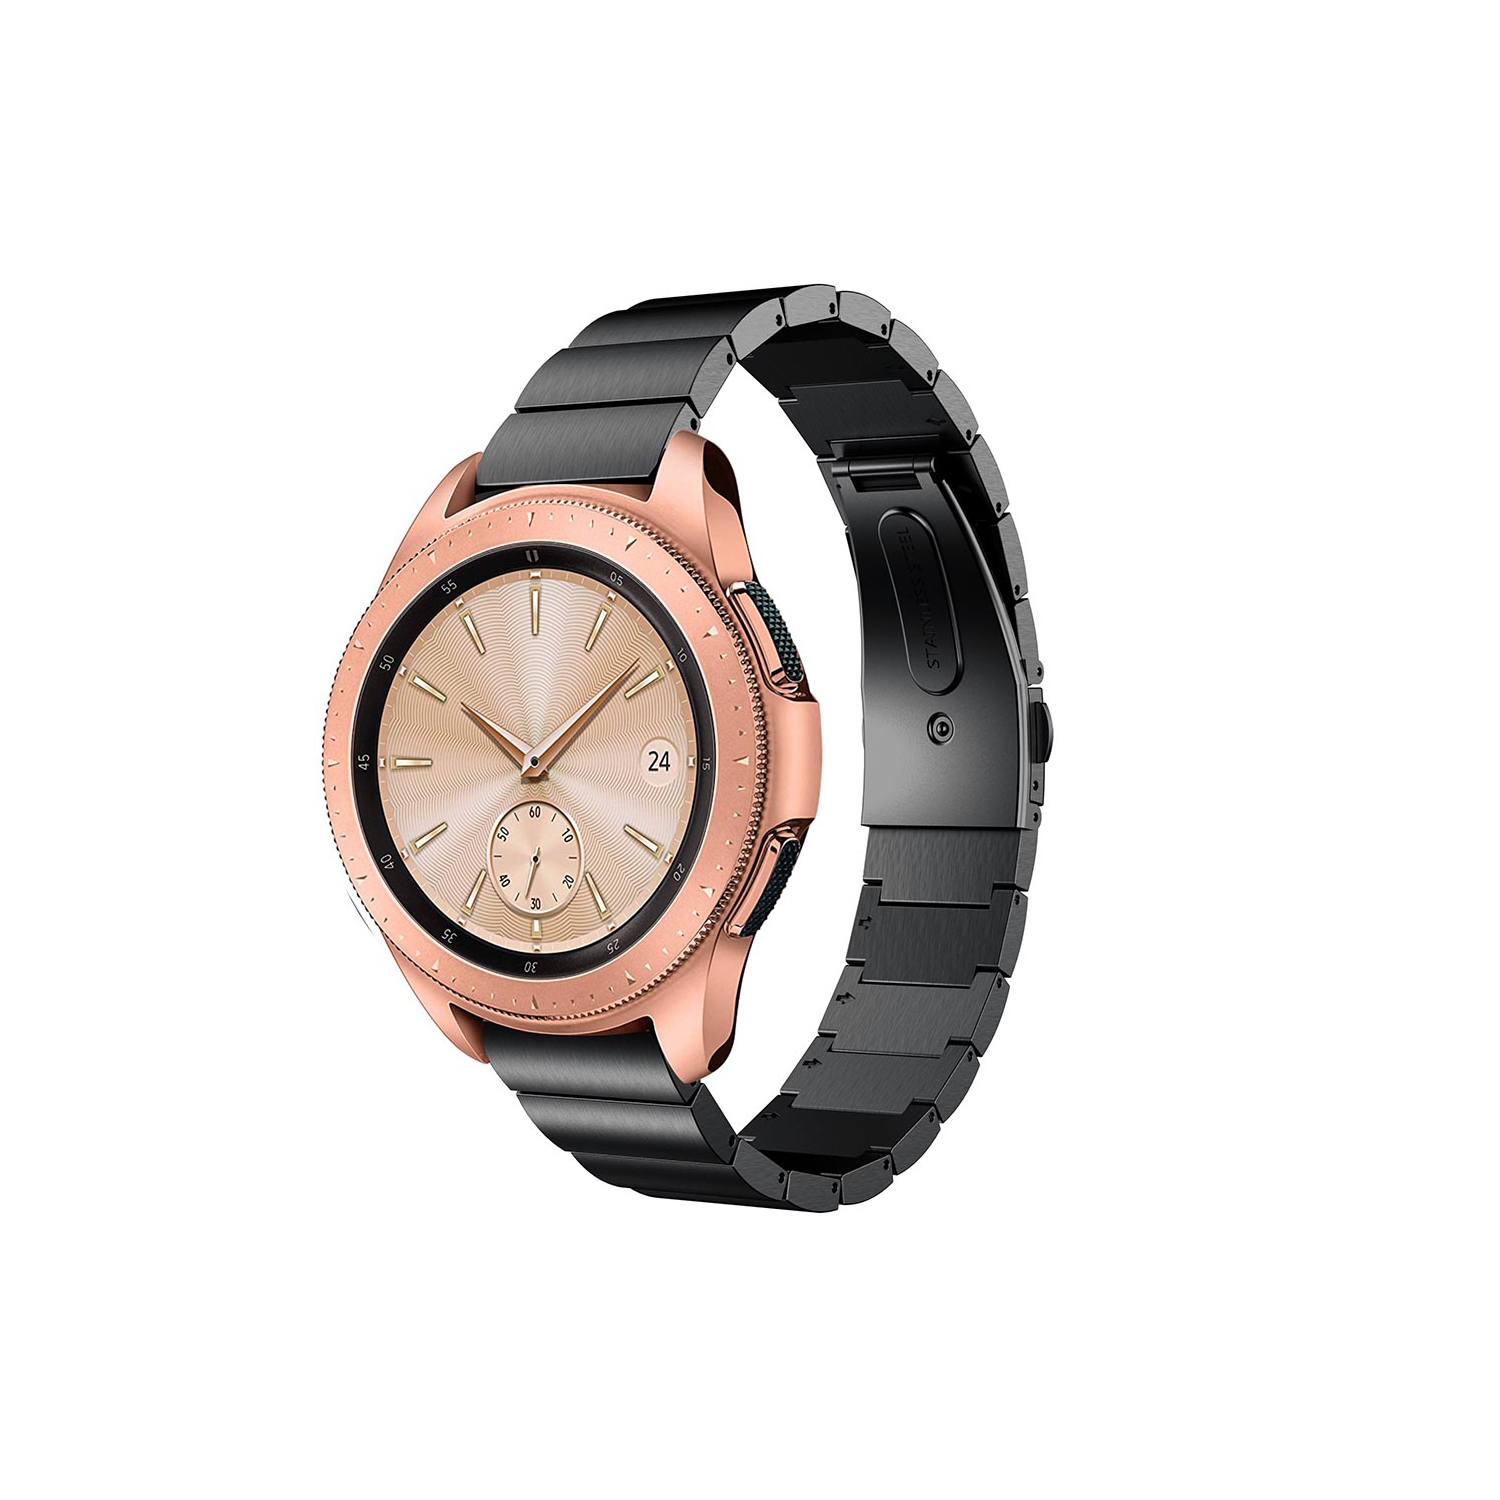 StrapsCo Bracelet Watch Band Compatible with Samsung Galaxy Watch, Galaxy Watch Active, Gear S3 & Gear Live - 20mm - Black